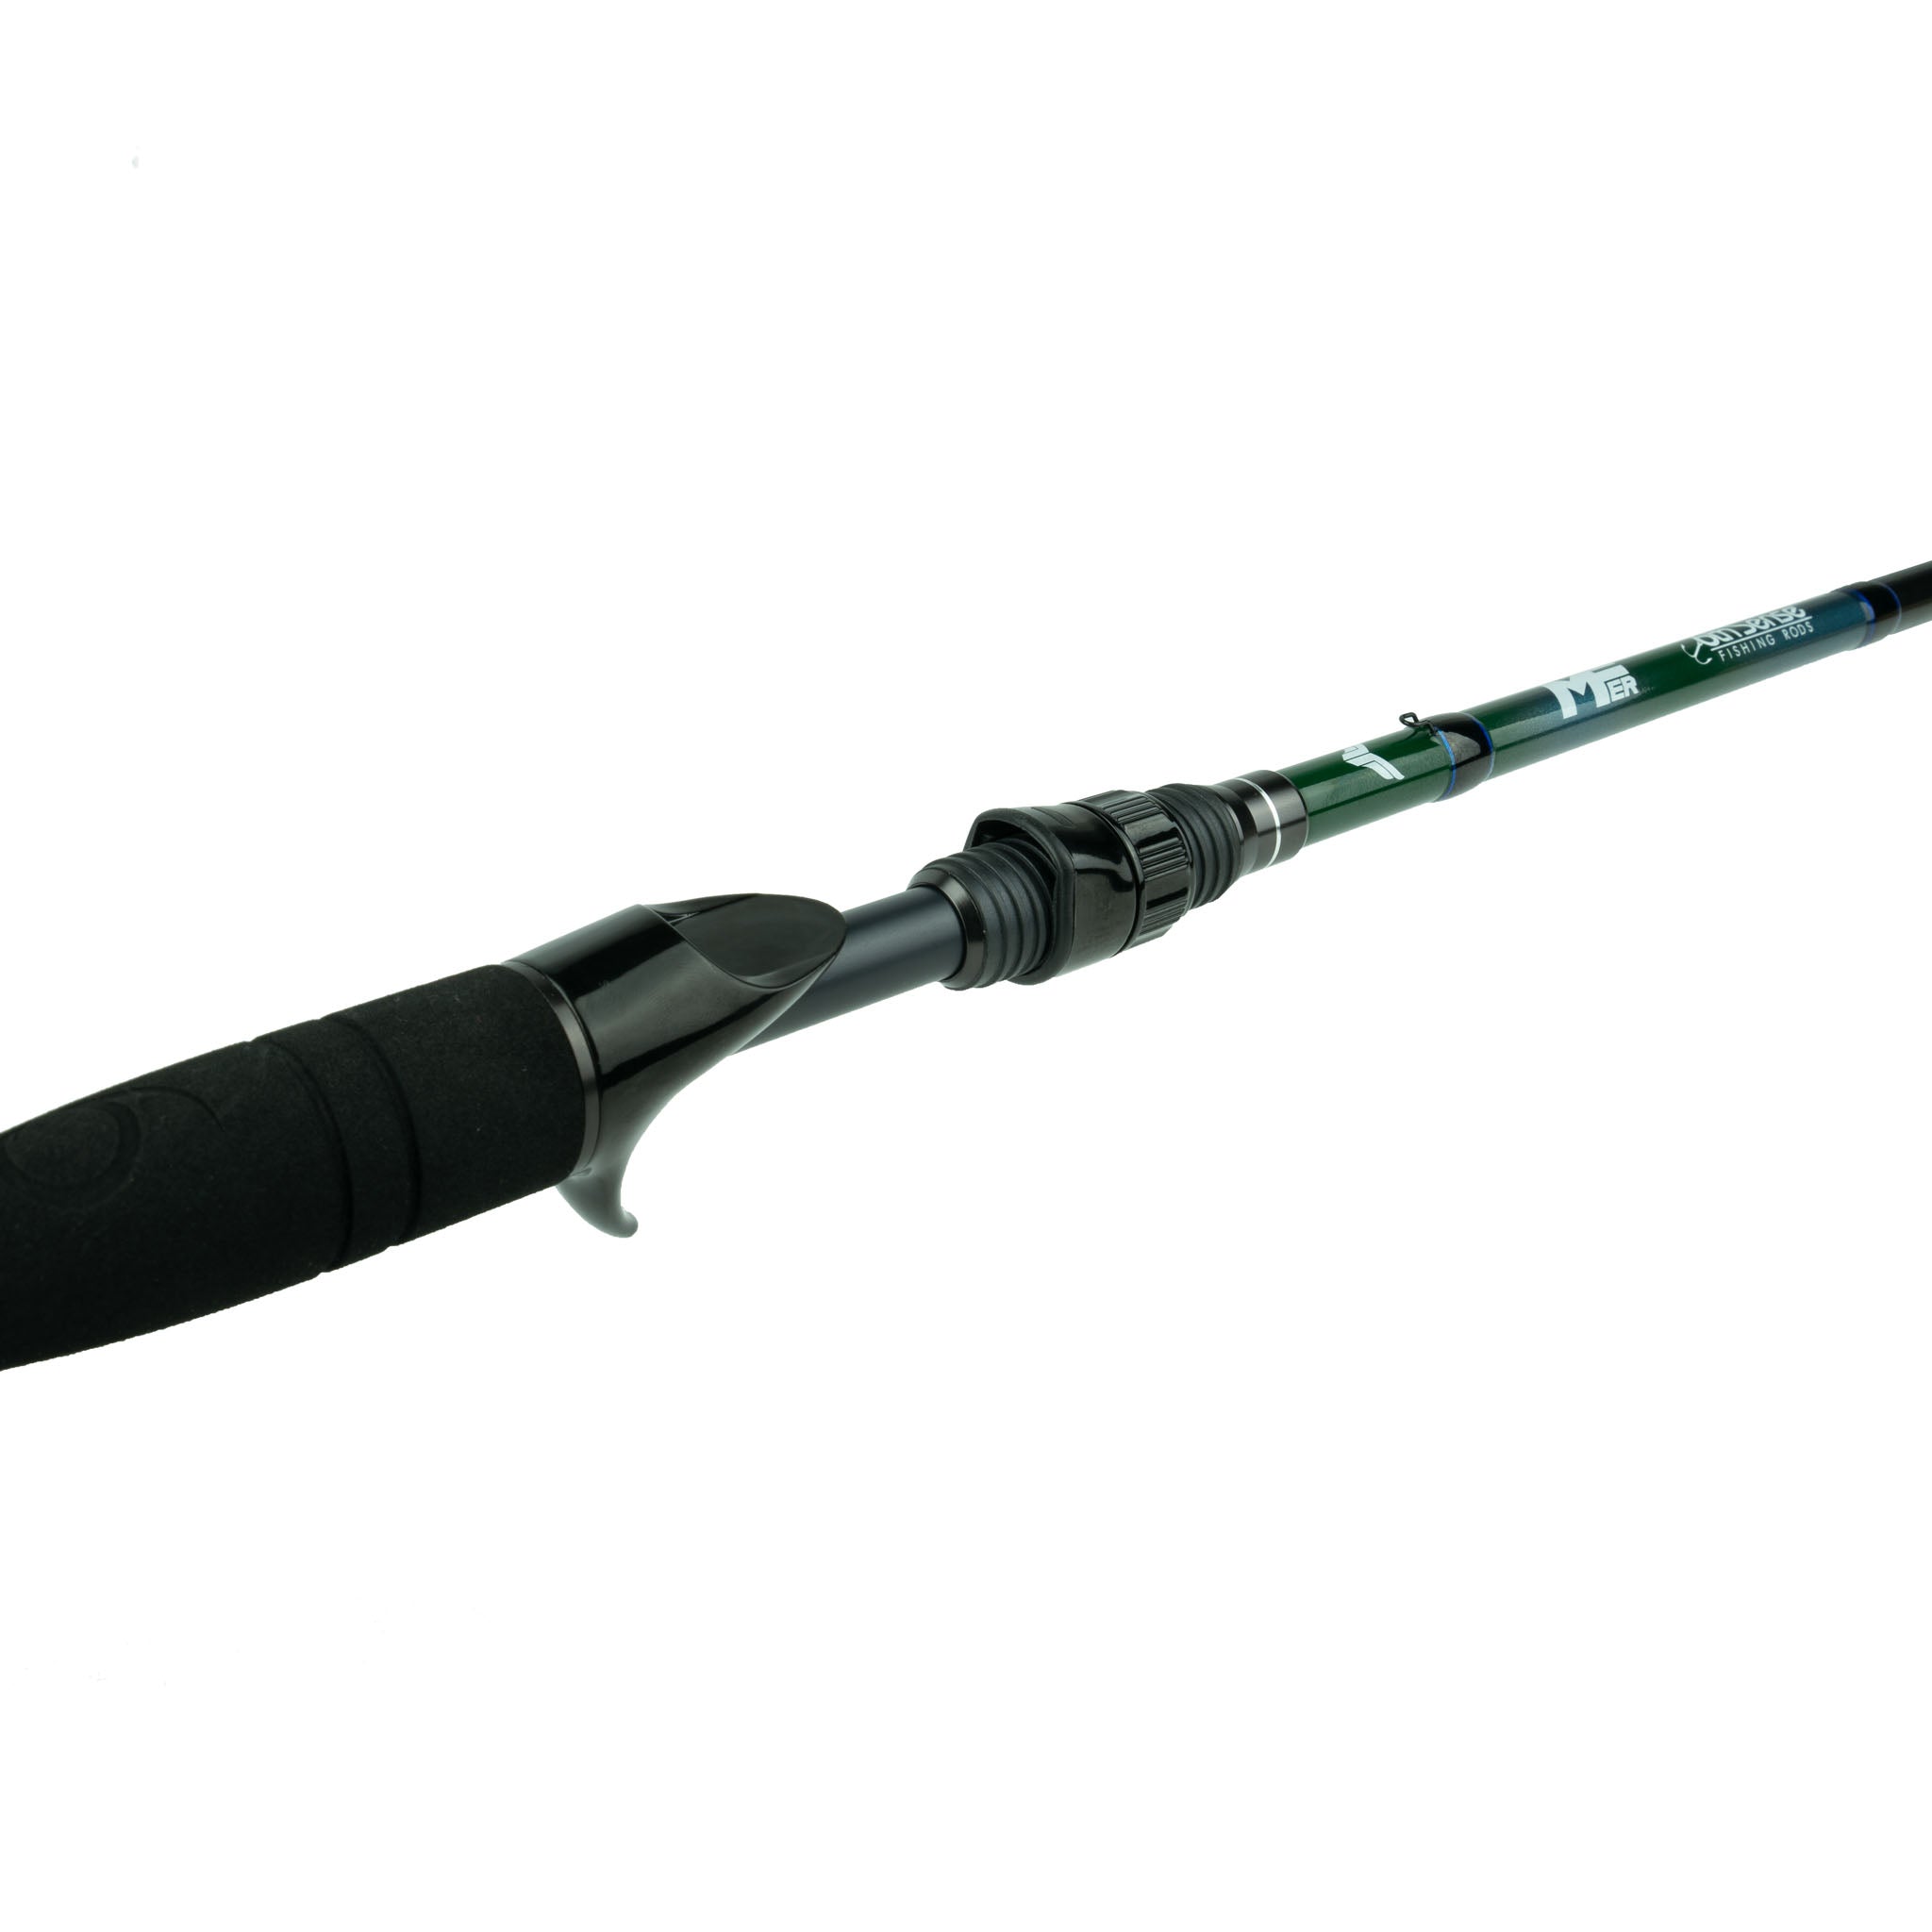 6th Sense Fishing - Milliken Series Rod - 7'4 Hvy, Mod-Fast (ZARK